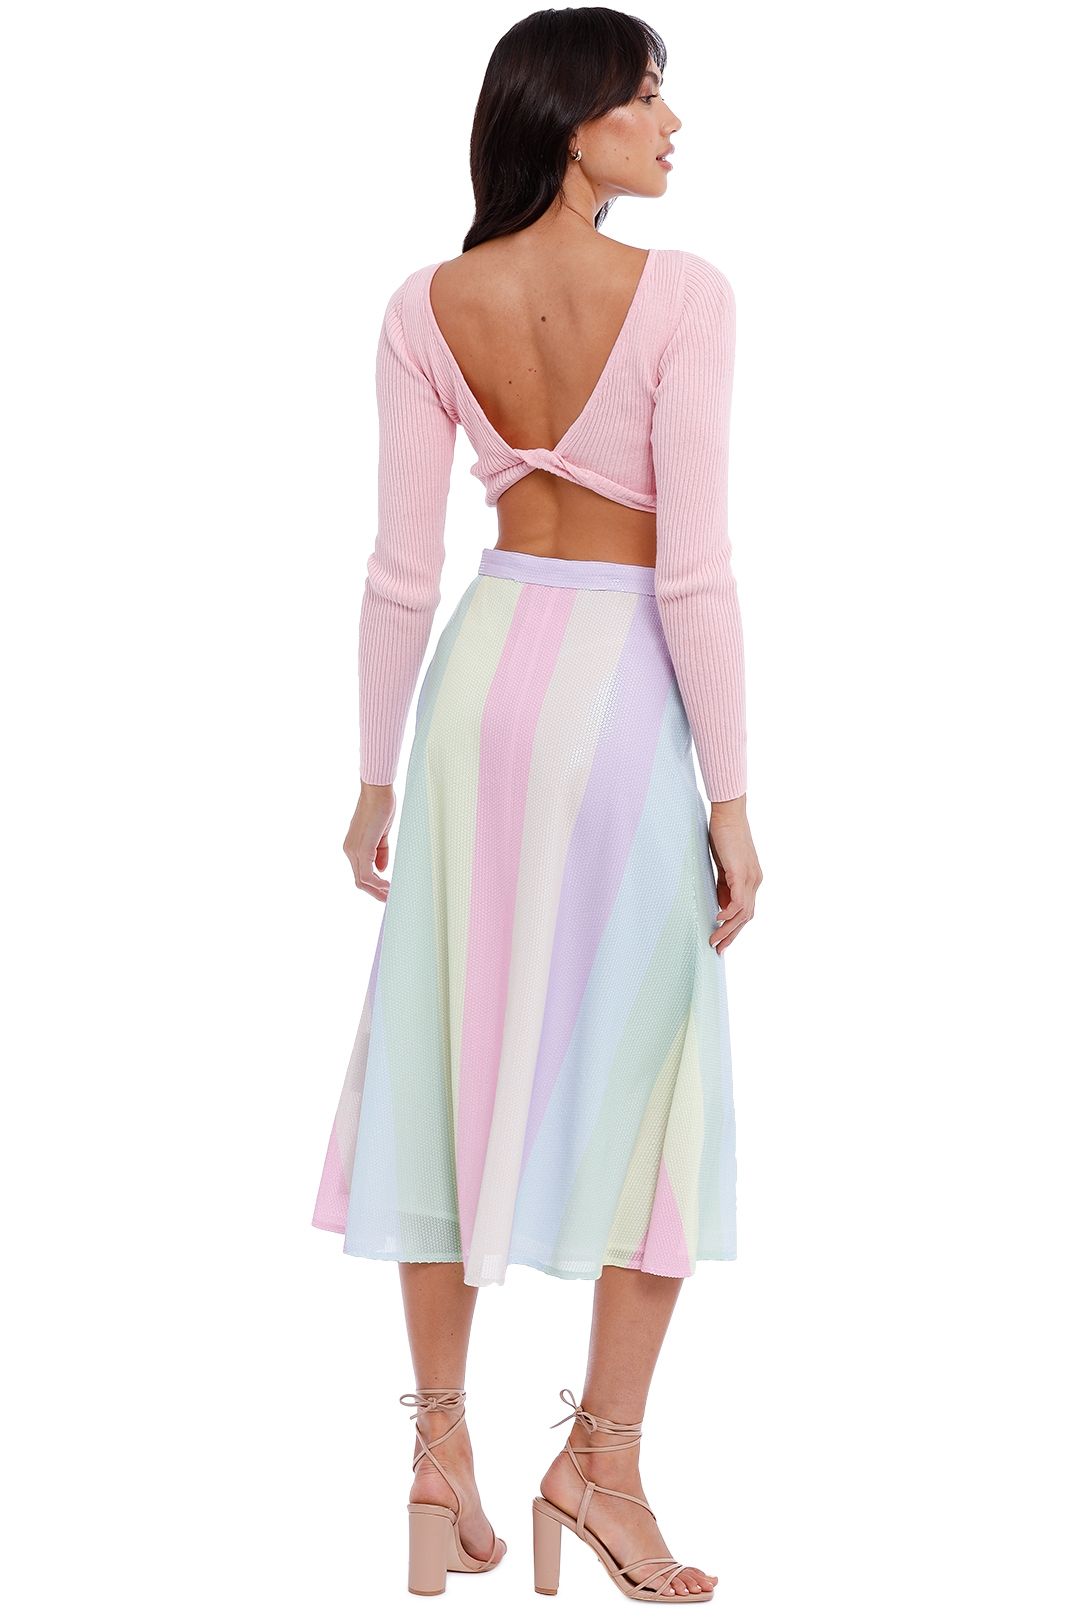 Olivia Rubin Neapolitan Skirt Ombre Stripe